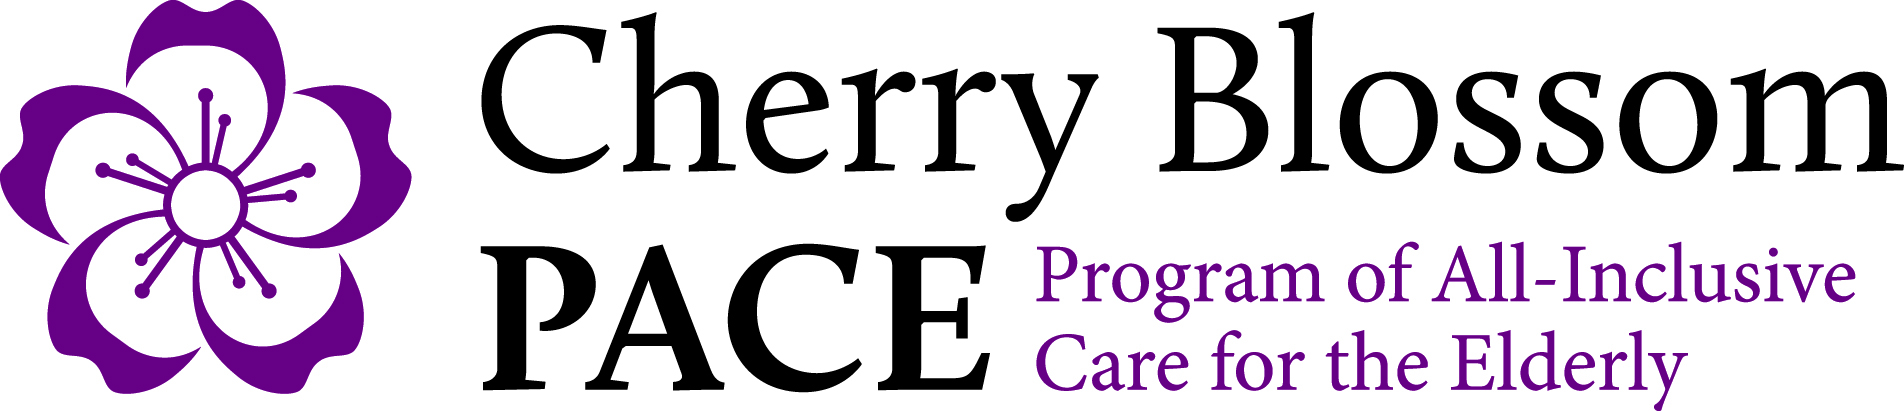 CherryBlossom_PACE_Secondary-logo_CMYK